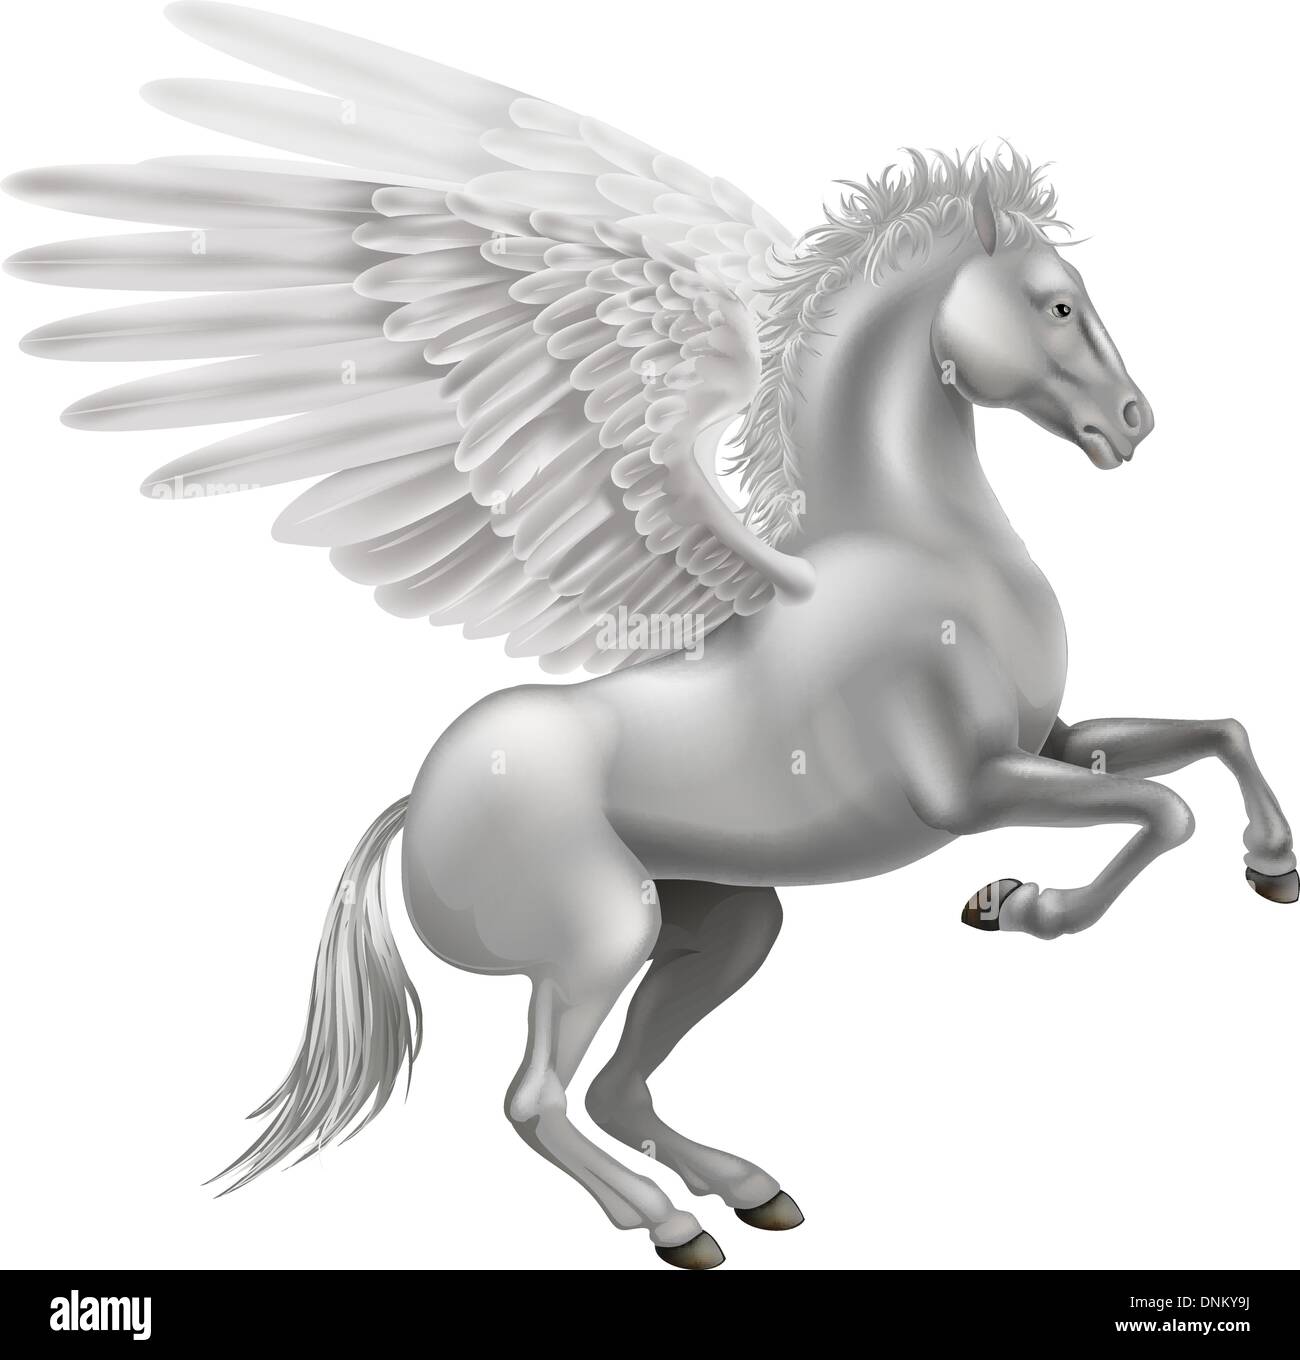 Illustration of the legendary winged horse from Greek mythology, Pegasus Stock Vector